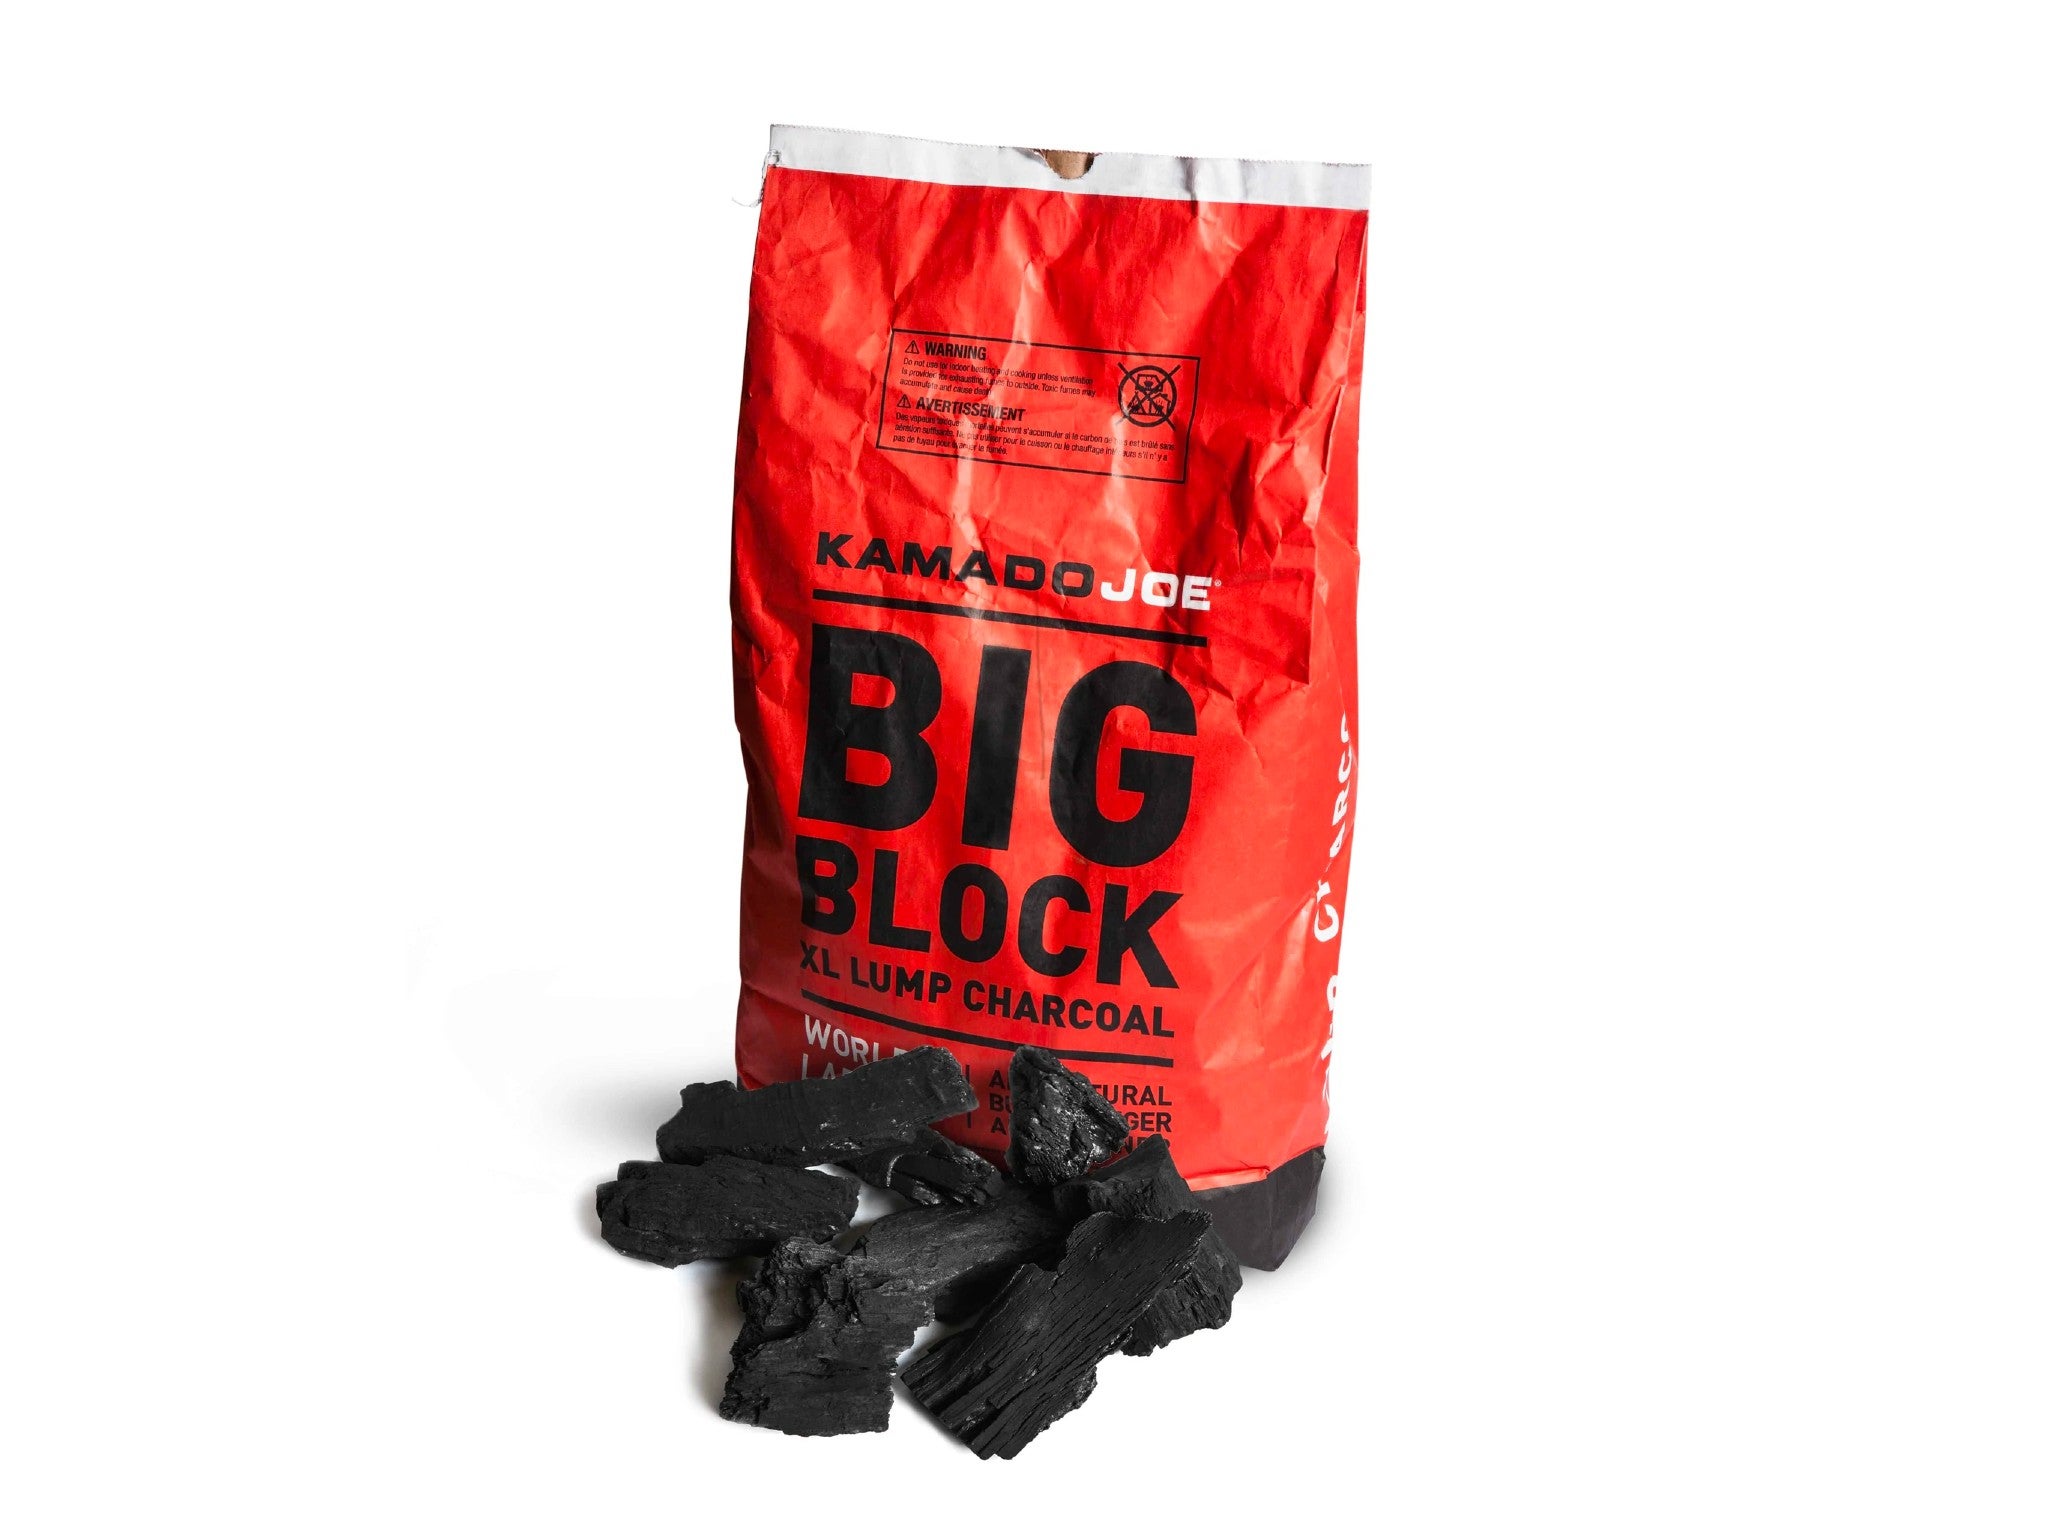 Kamado Joe big block XL lump charcoal indybest